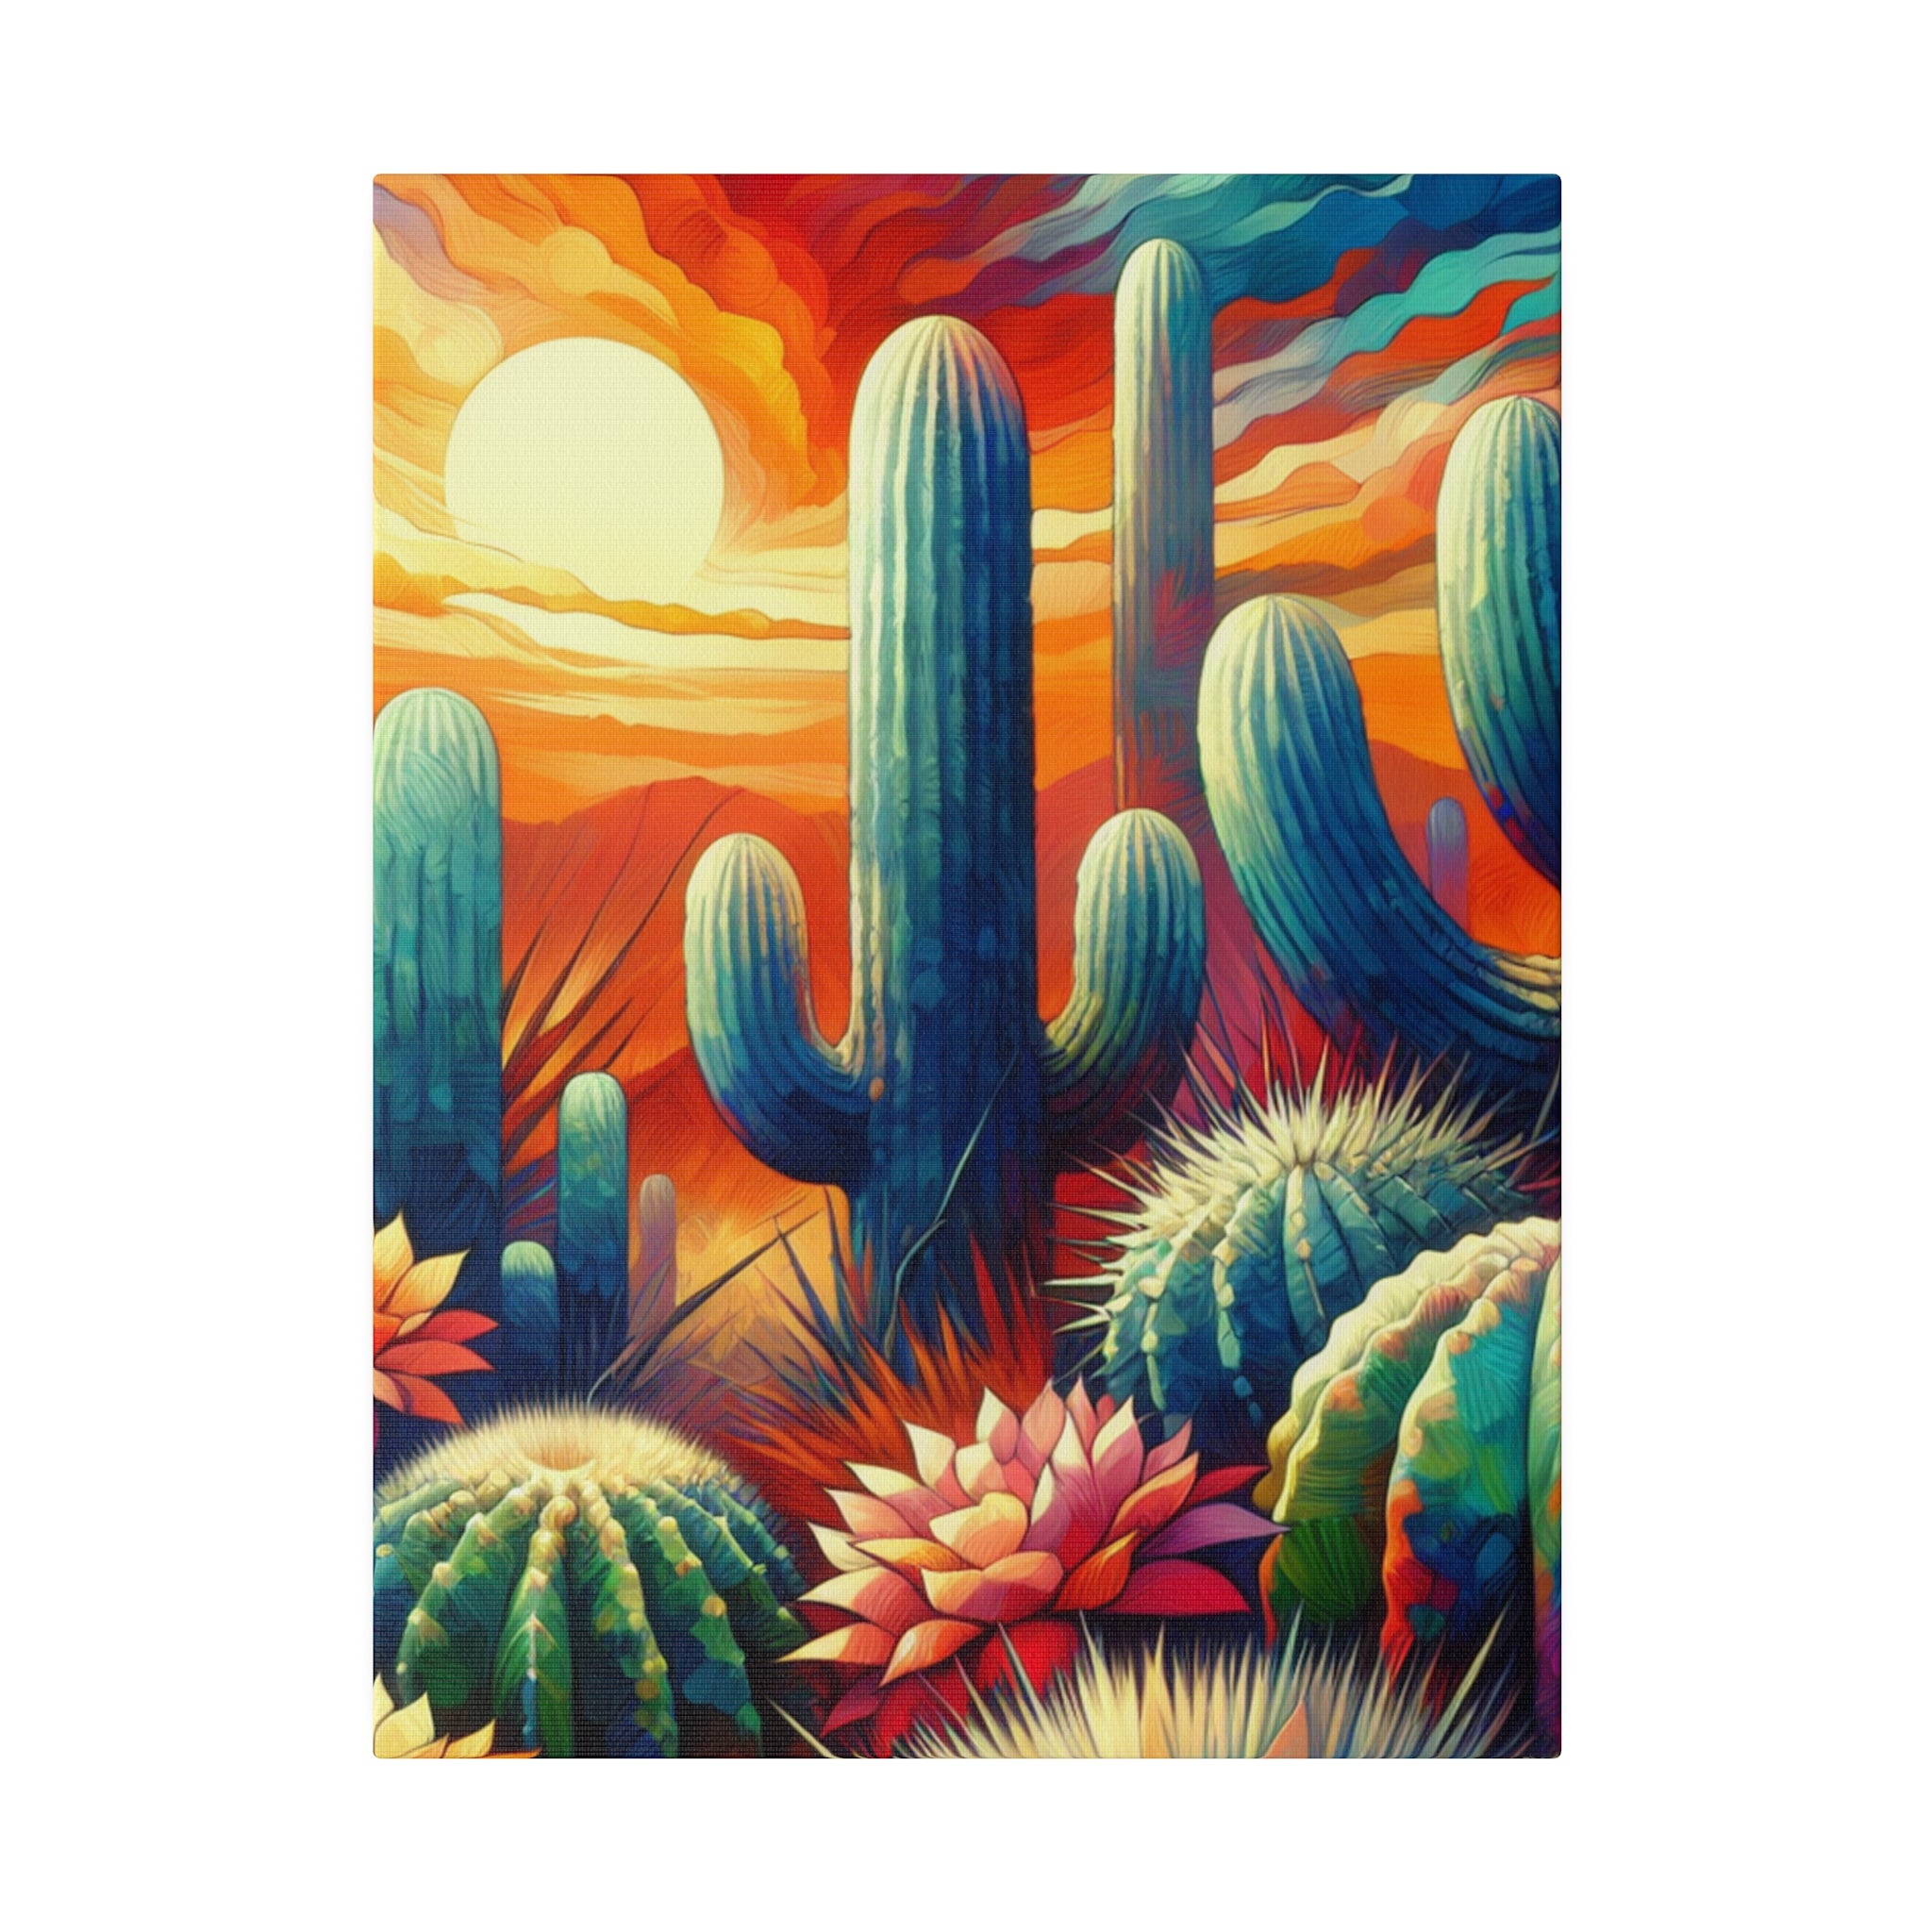 "Cactus Mirage Artistic Canvas Wall Decor"